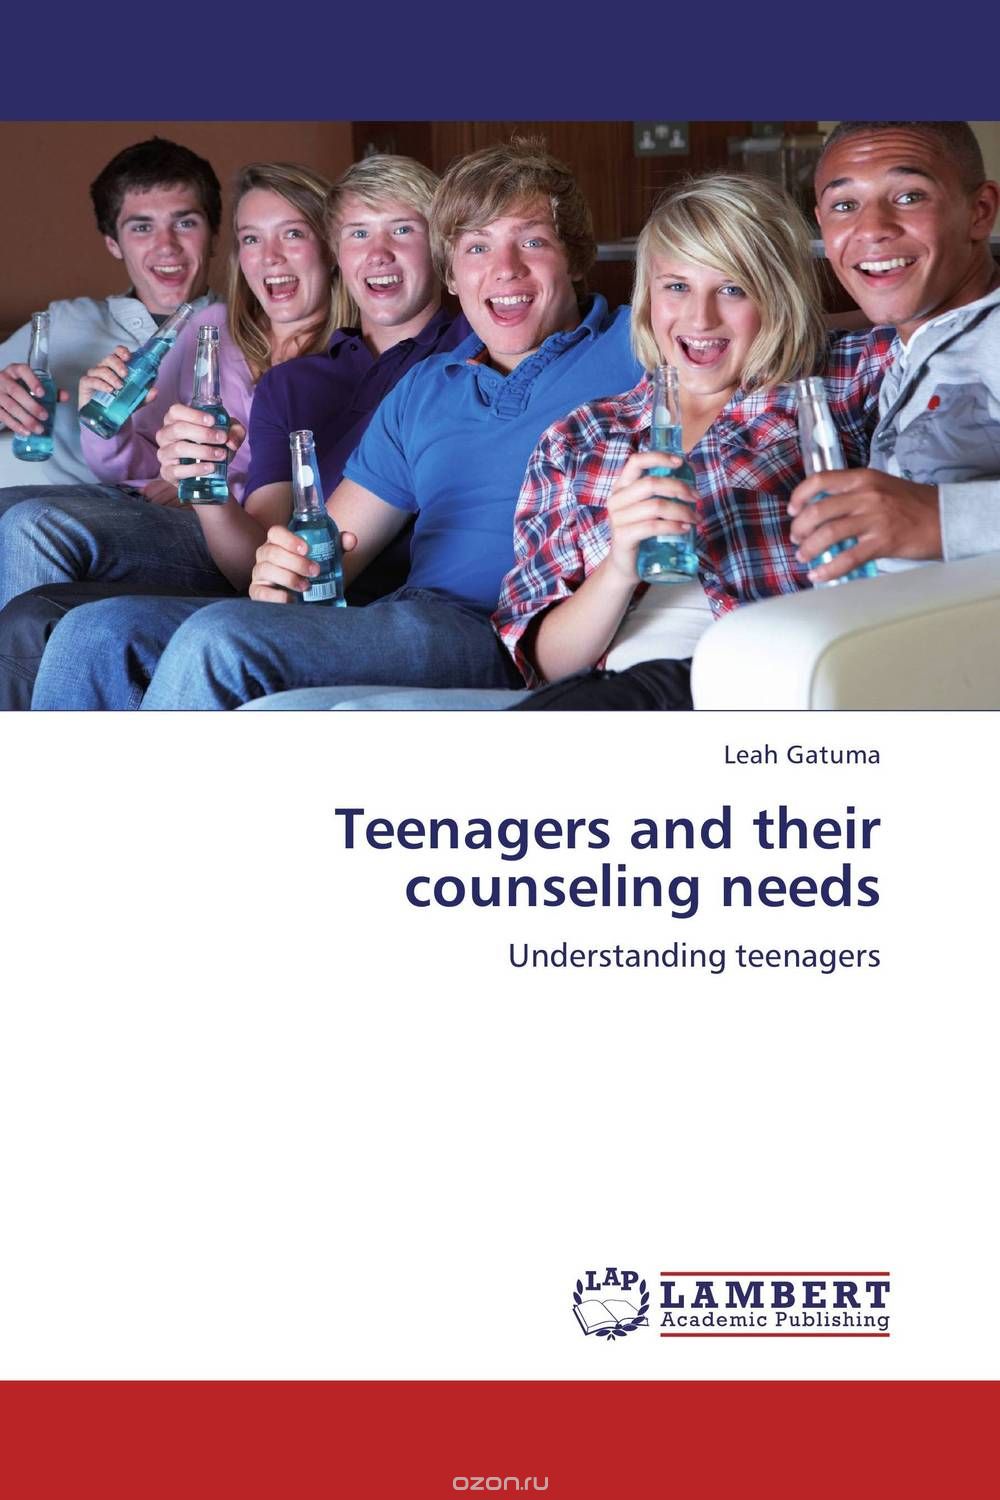 Скачать книгу "Teenagers and their counseling needs"